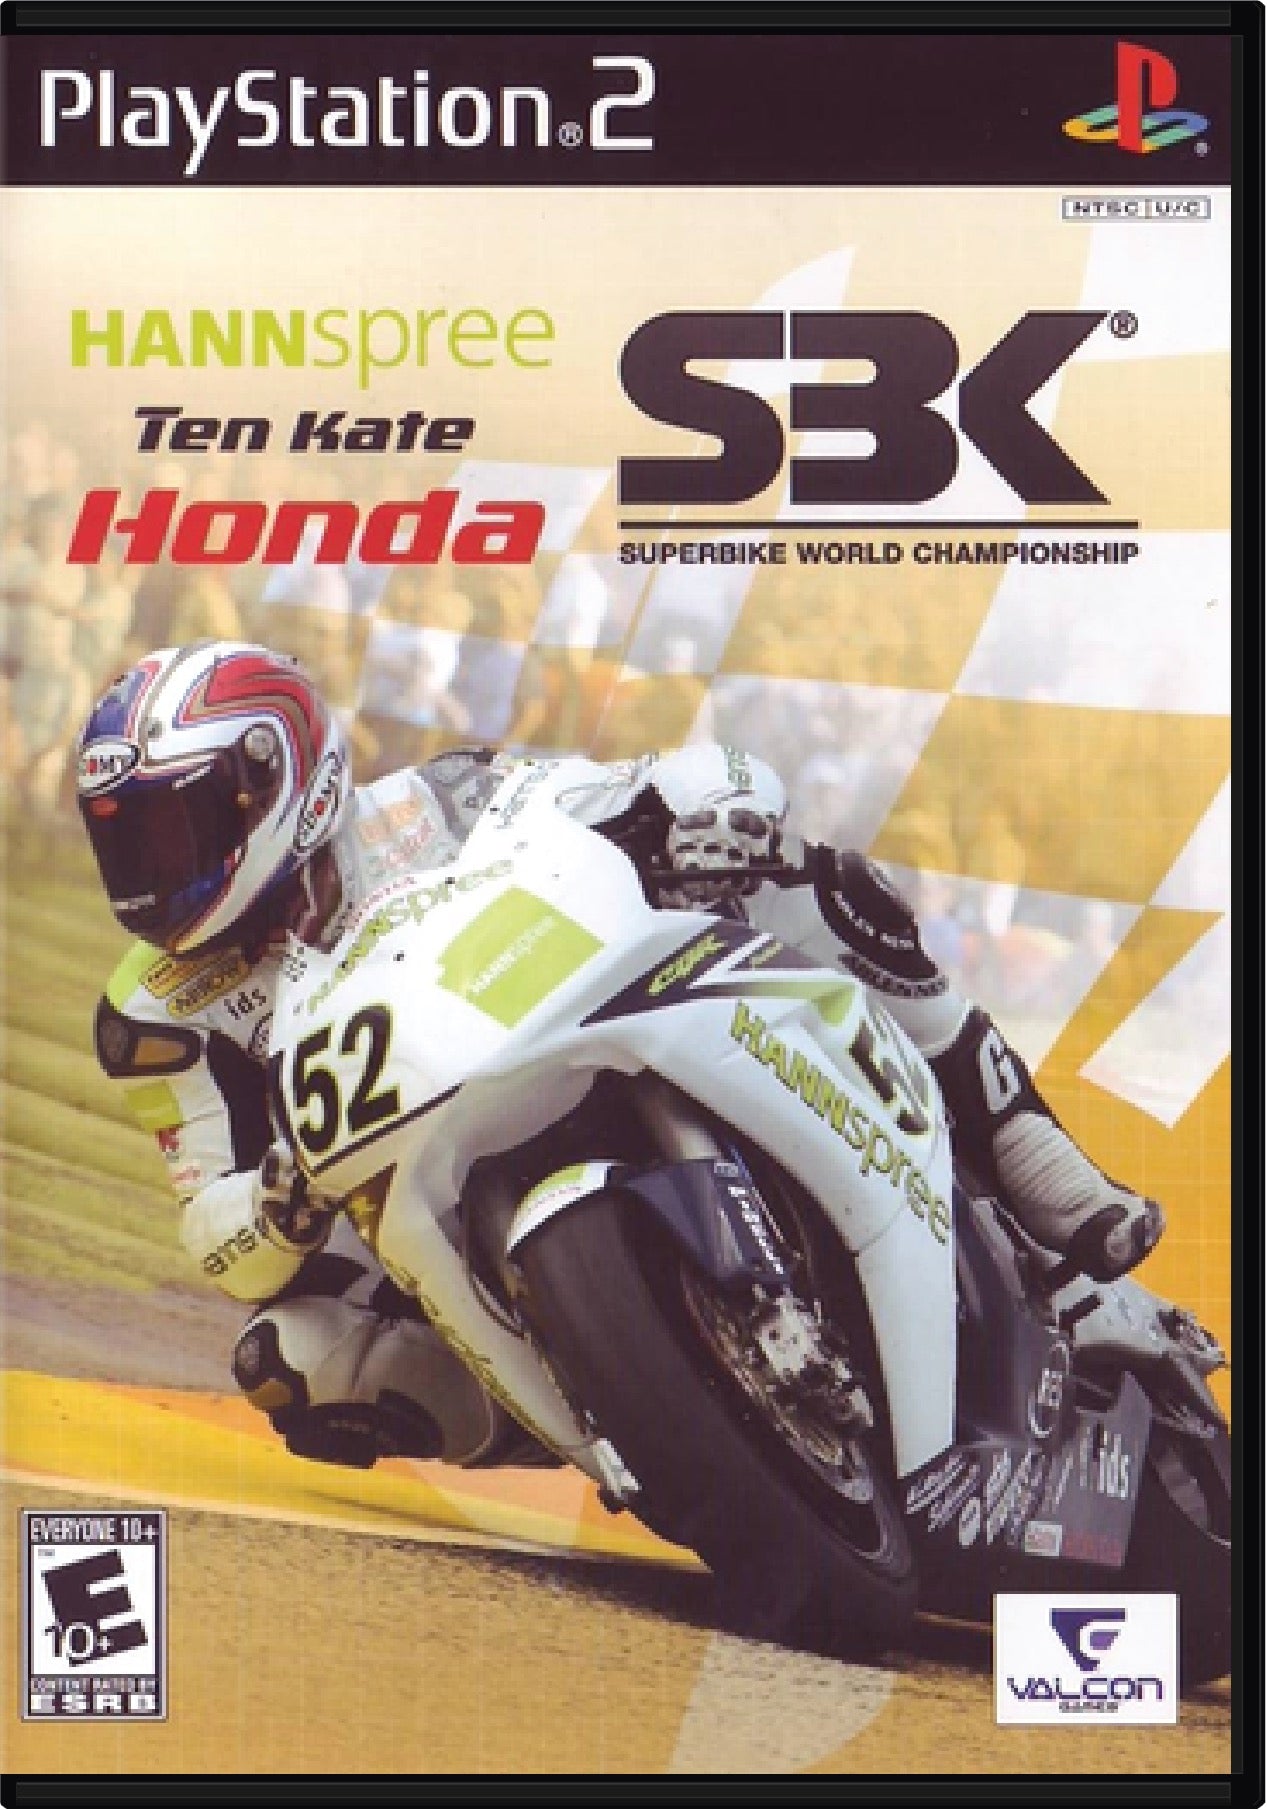 Hannspree Ten Kate Honda SBK Superbike World Championship Cover Art and Product Photo